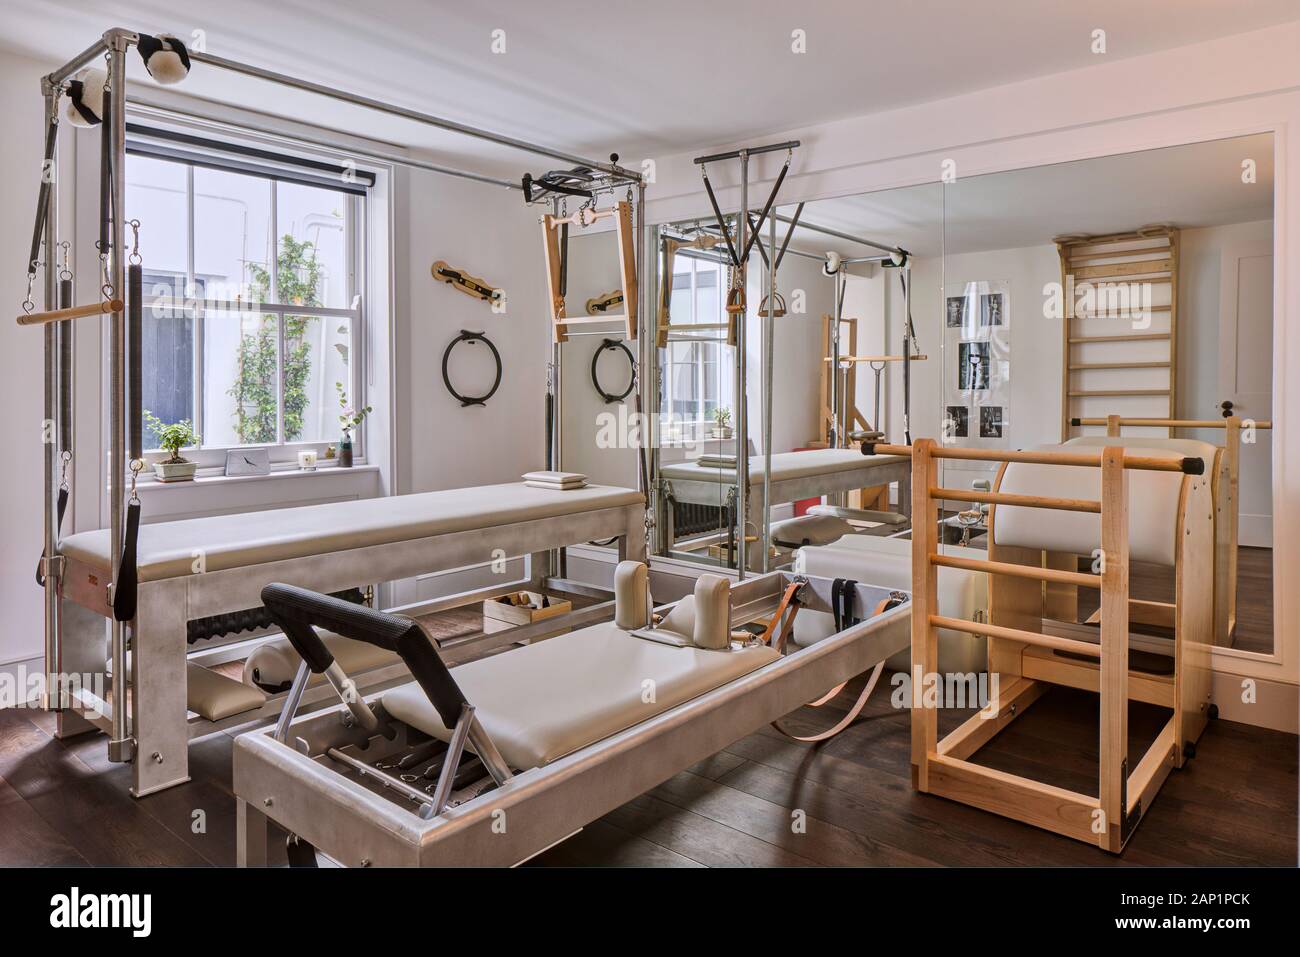 Main room with equipment. Zed Pilates Studio, London, United Kingdom. Architect: N/A, 2019. Stock Photo